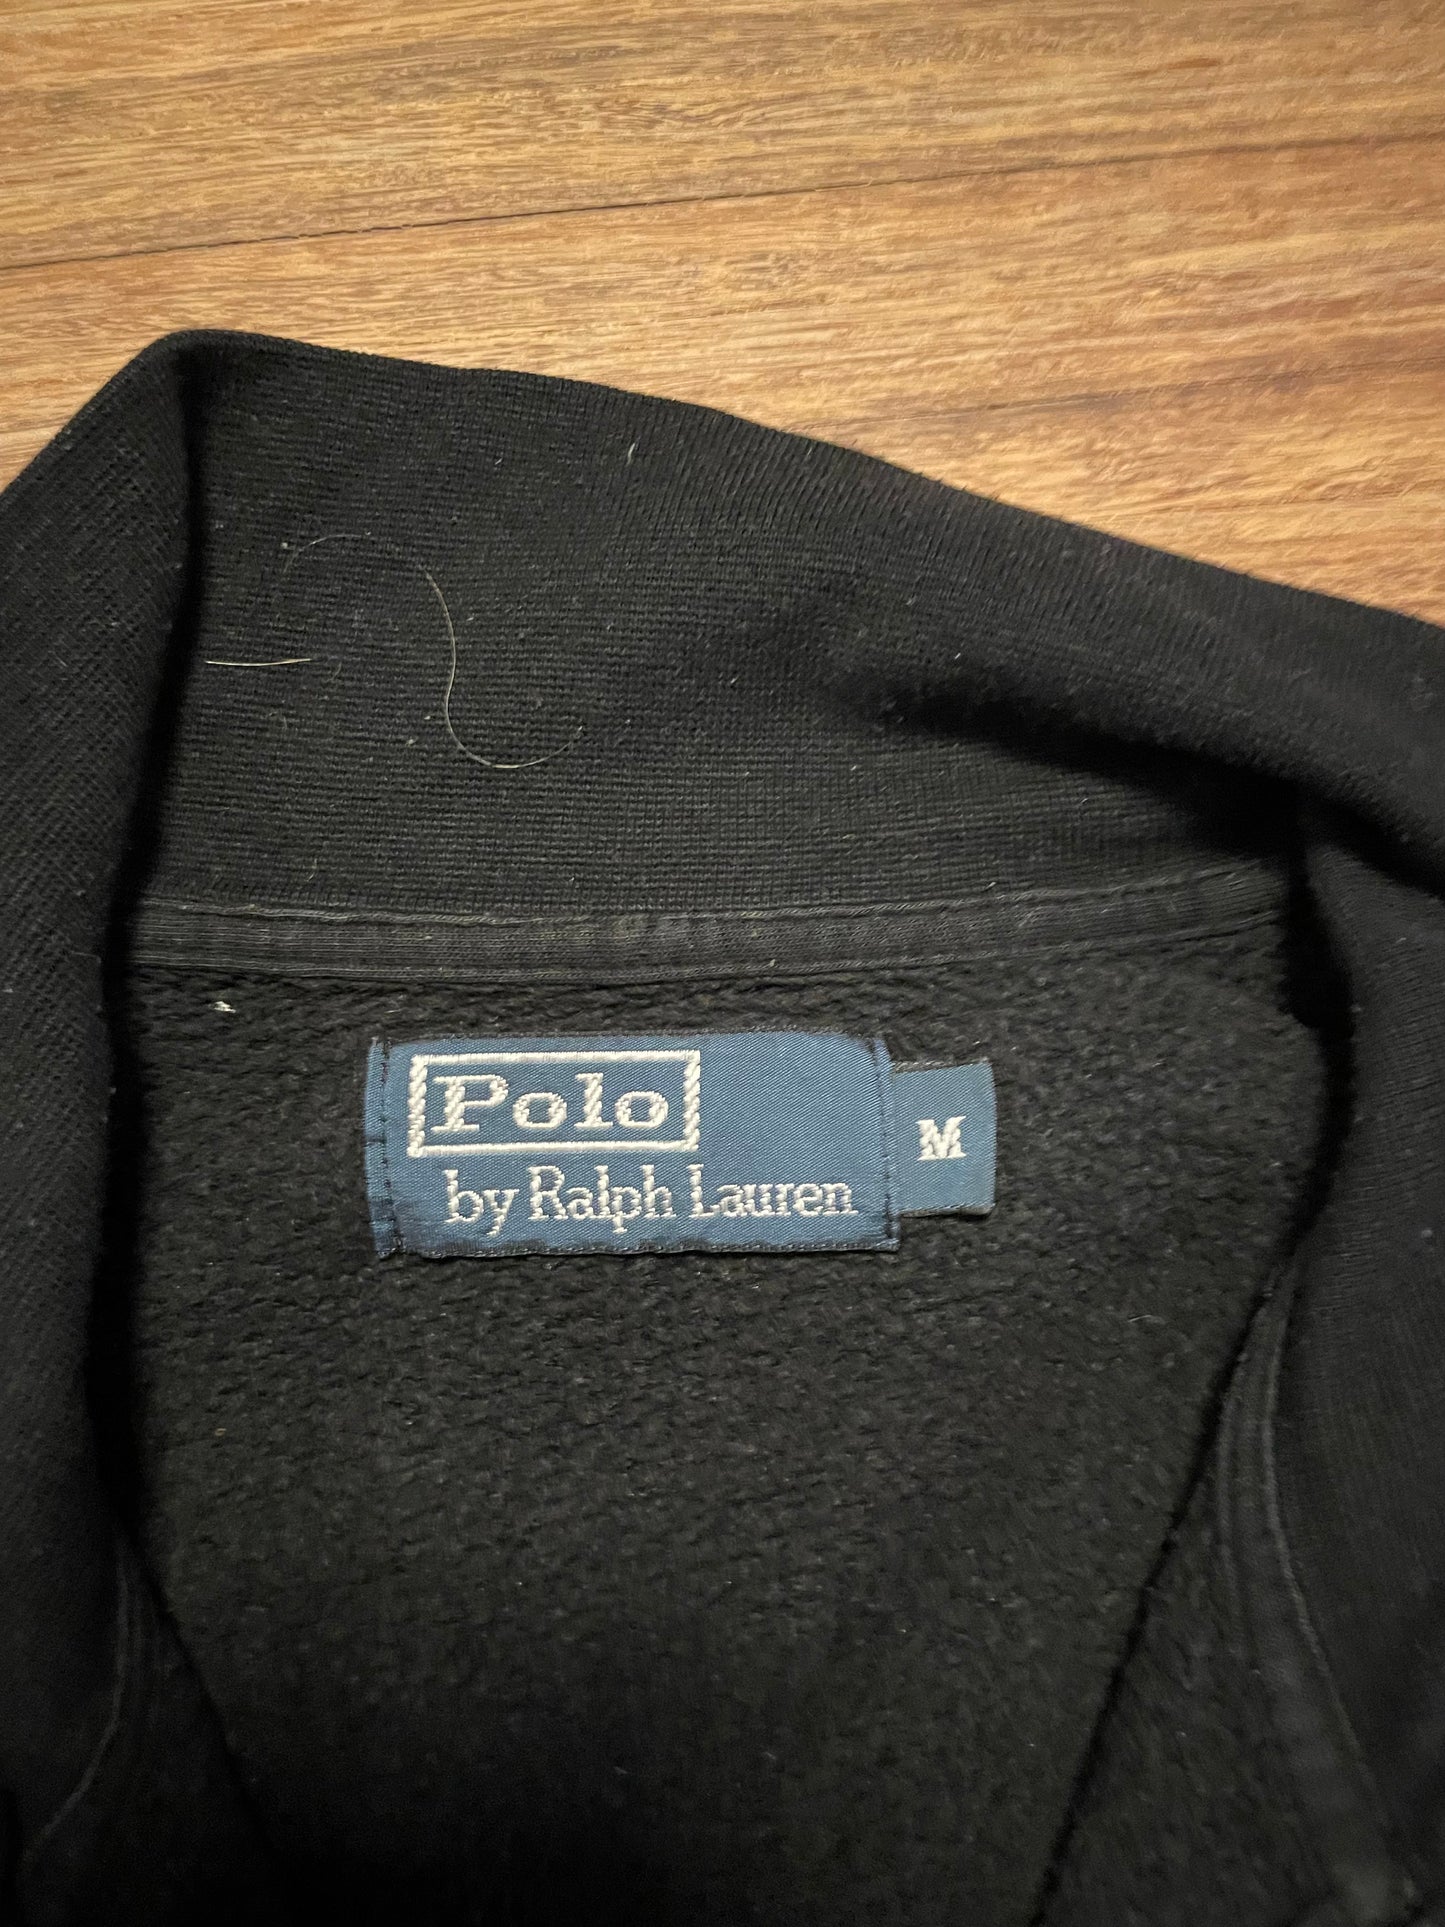 Polo Ralph Lauren Jacket (M)